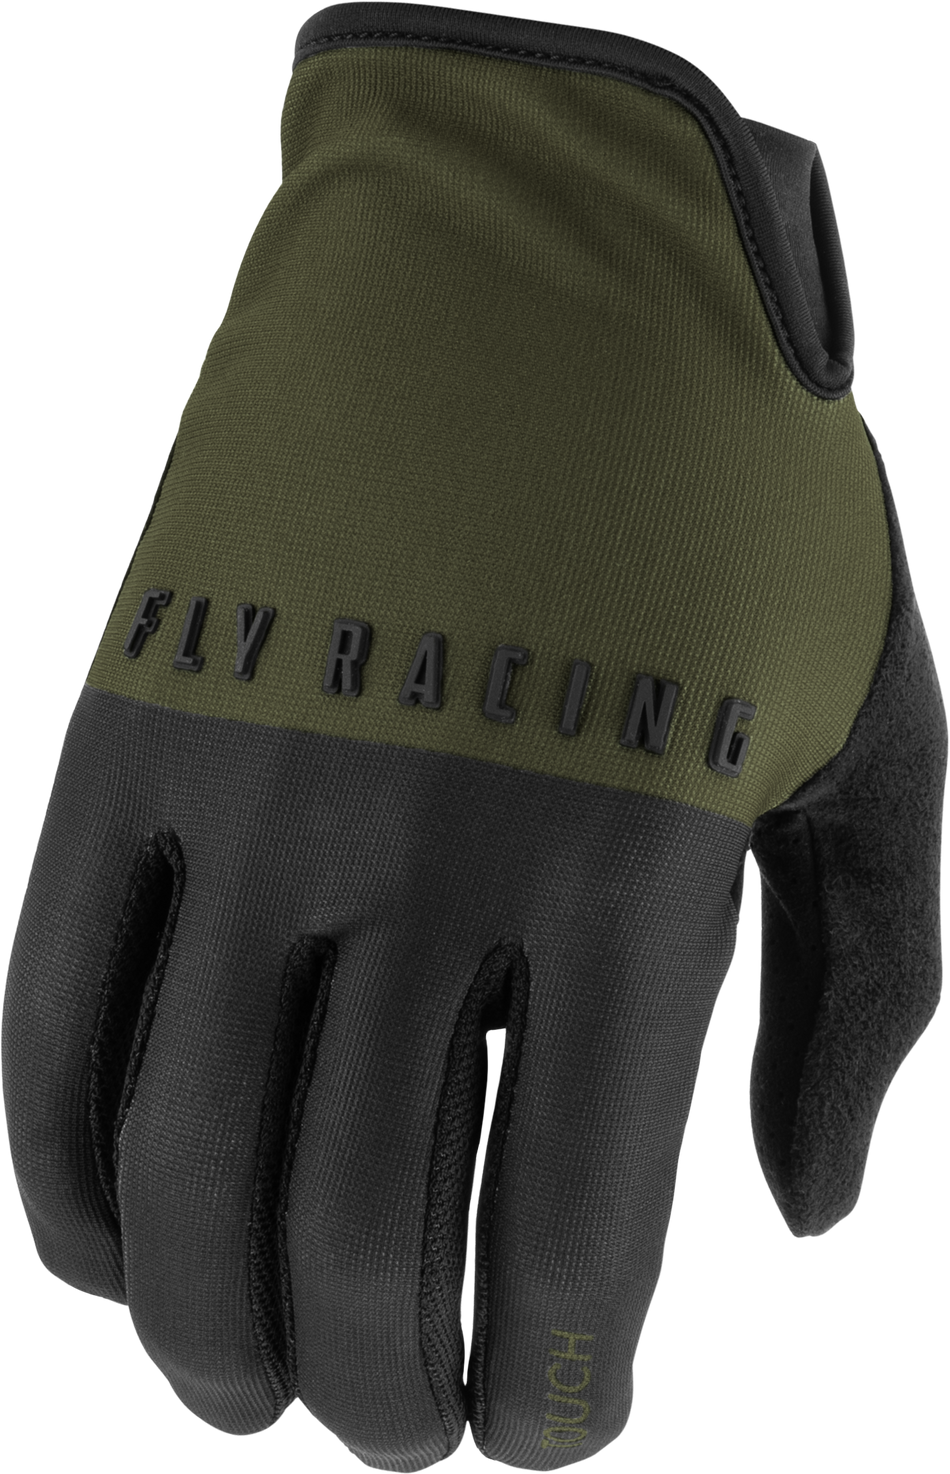 FLY RACING Media Gloves Dark Forest/Black Md 350-0122M